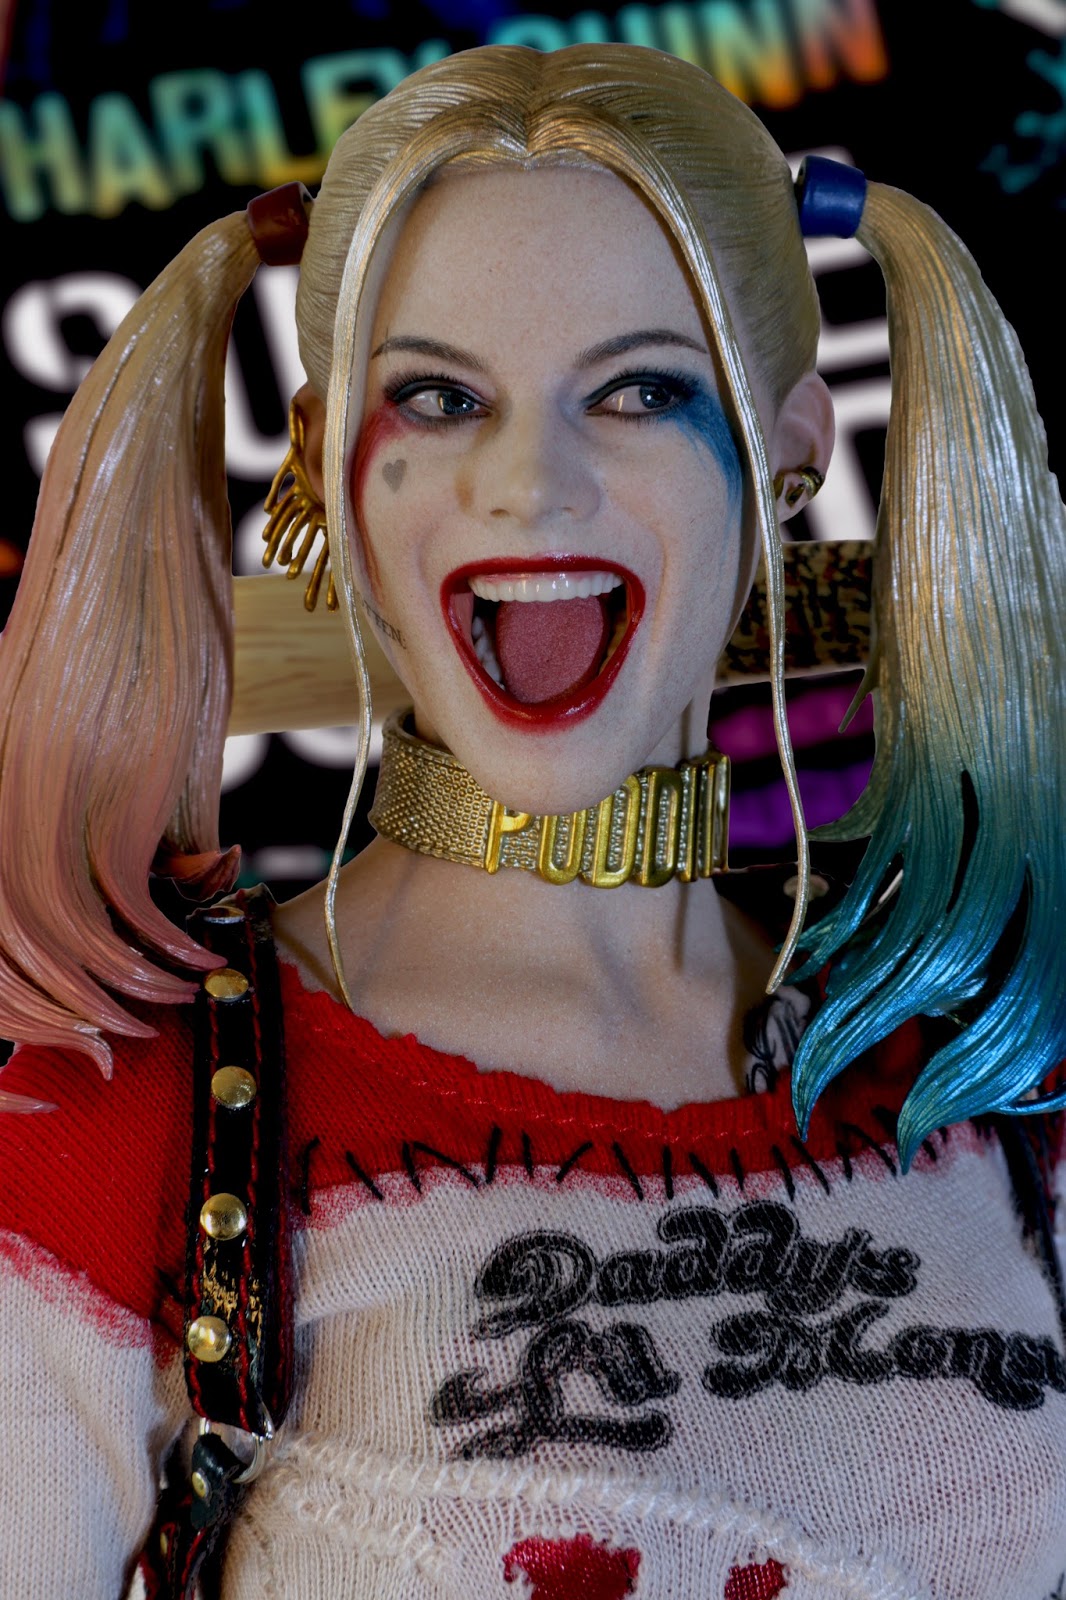 Hot Toys 1/6 Suicide Squad Movie Deadshot, Harley Quinn & Joker Figures